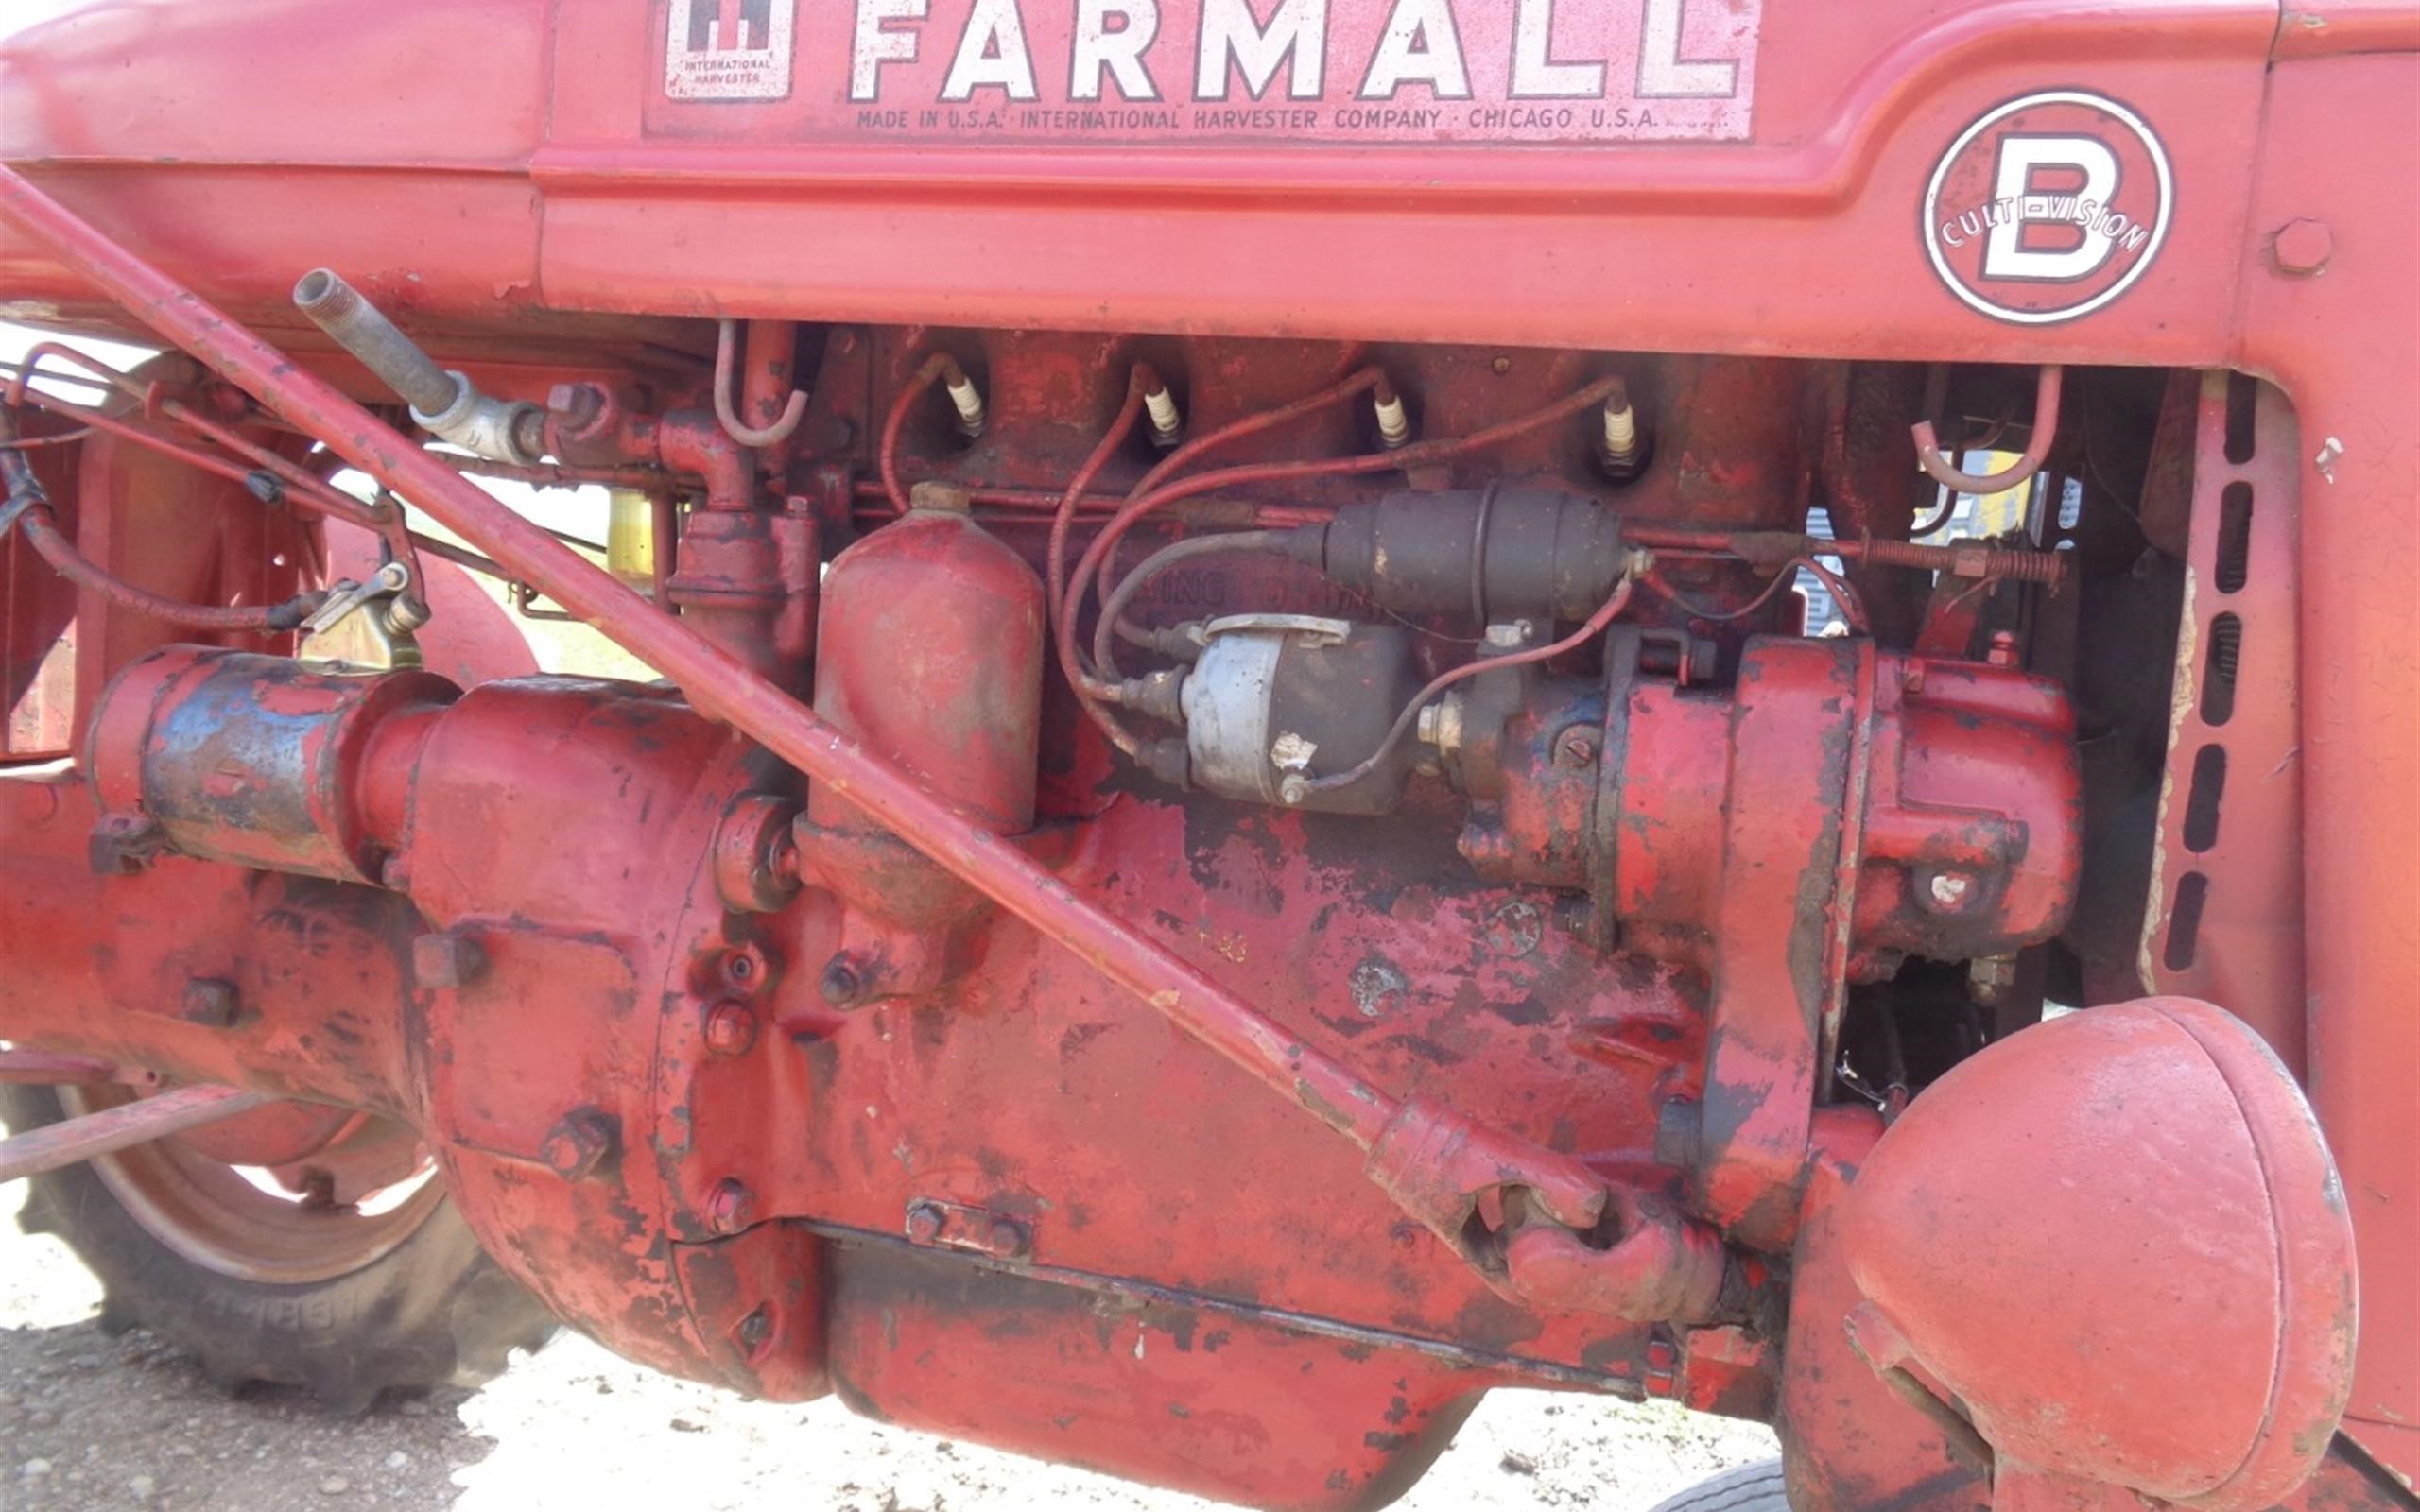 70 hp utility tractors for sale in nebraska